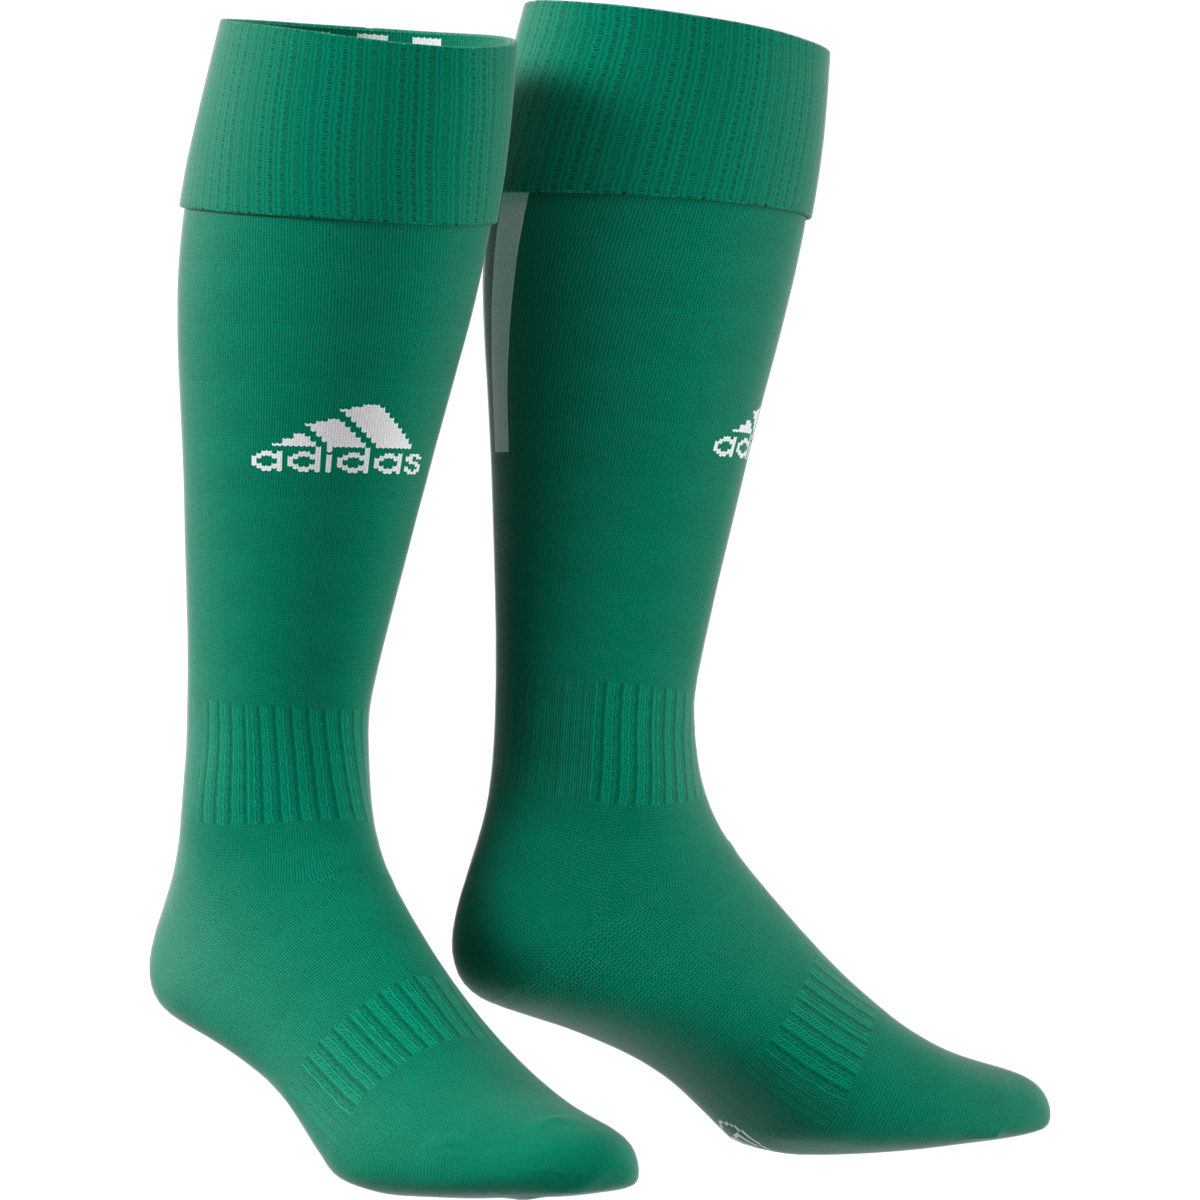 Adidas Santos 18 zelená/bílá EU 46/48